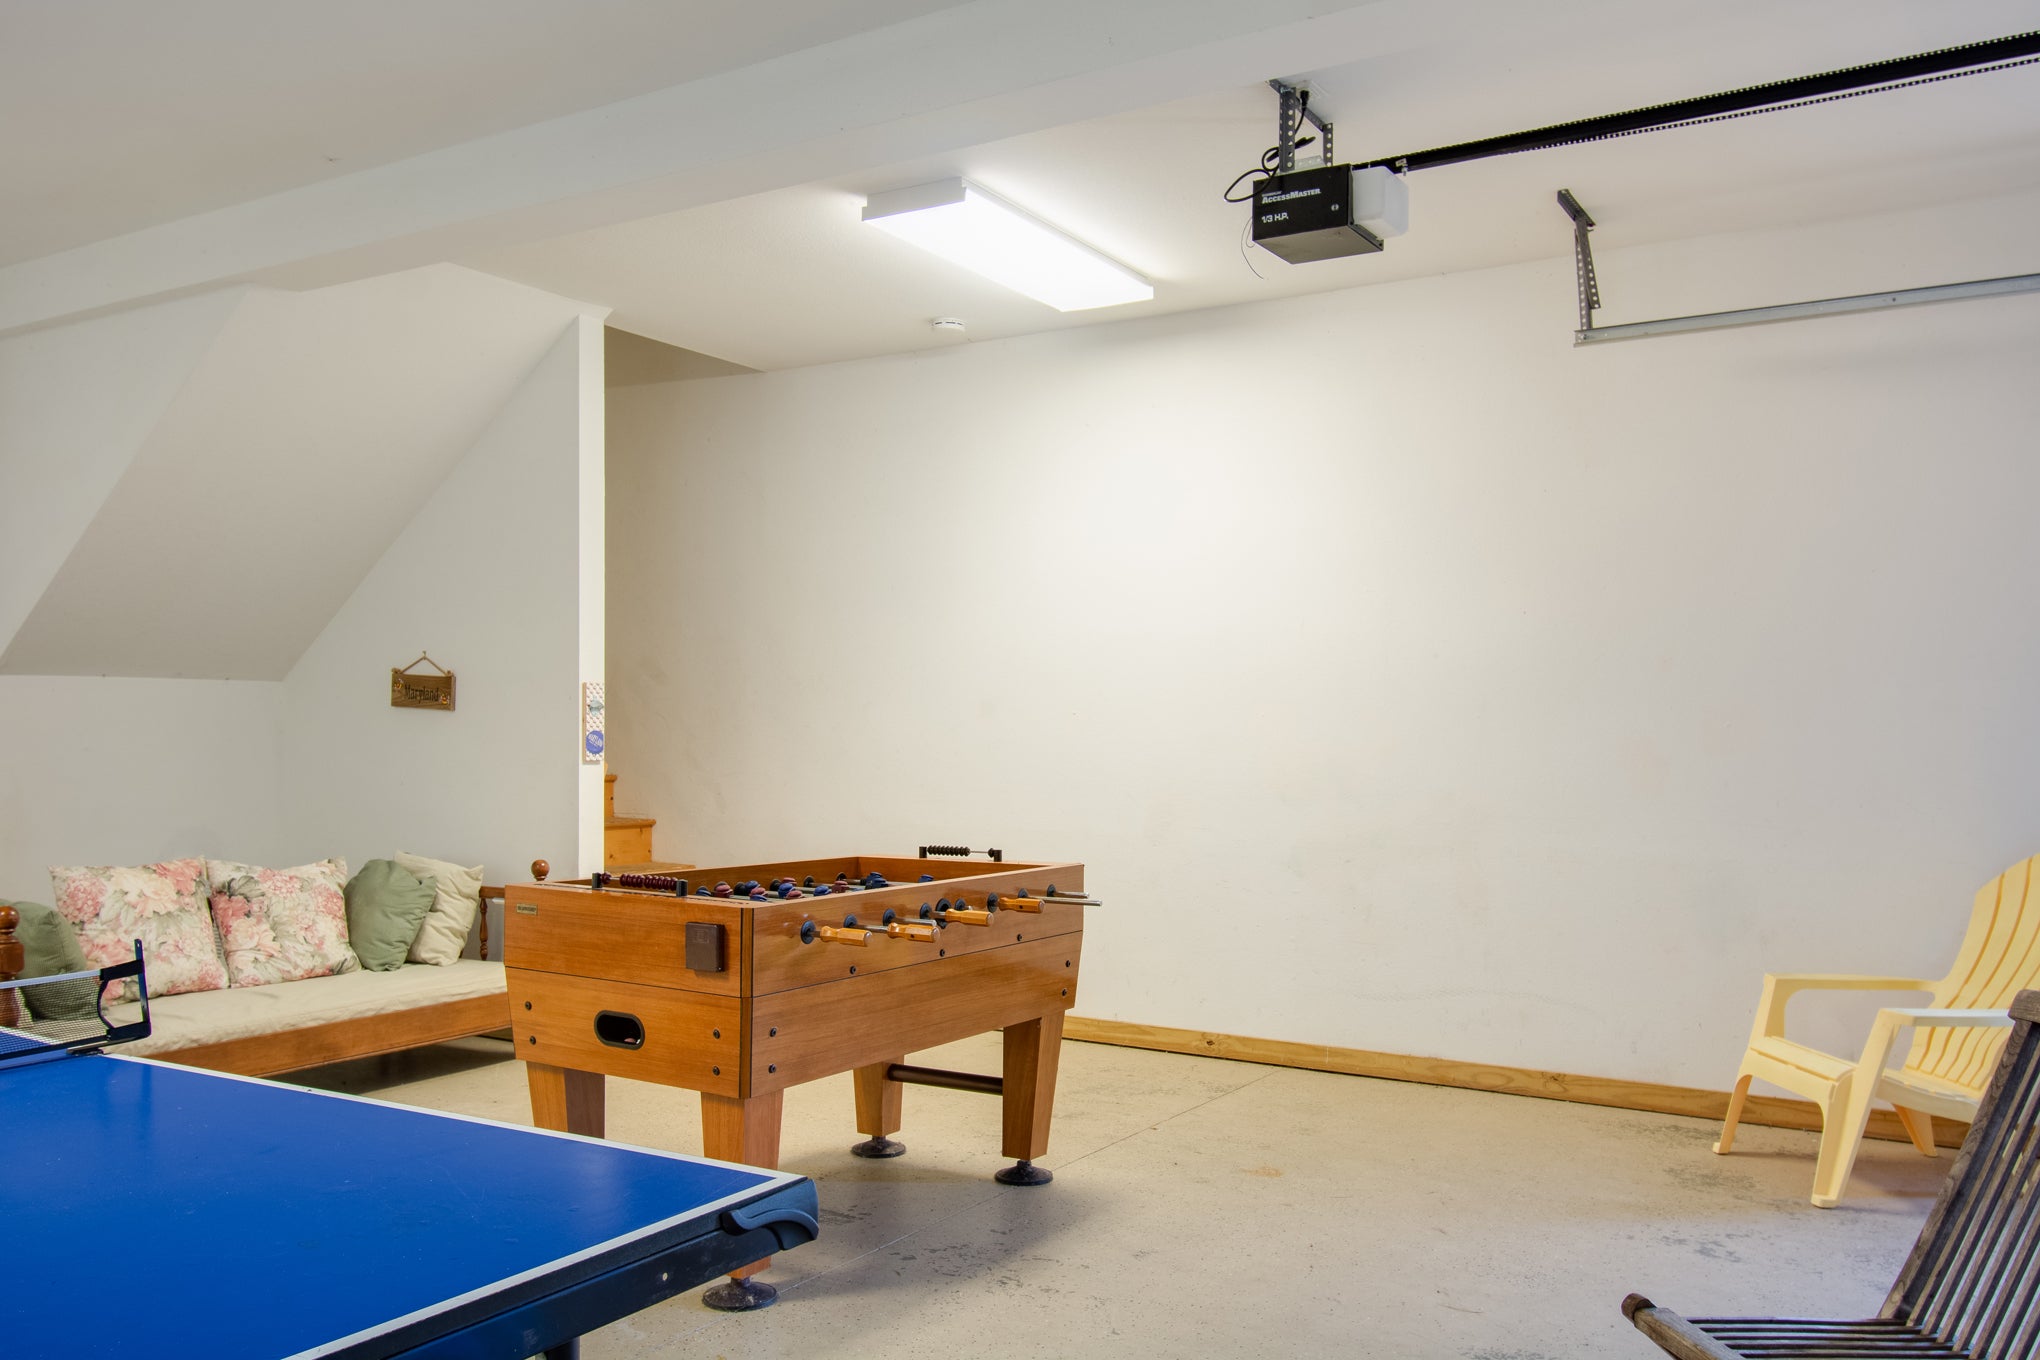 CC376: Wood Duck Inn l Bottom Level Garage/Game Room